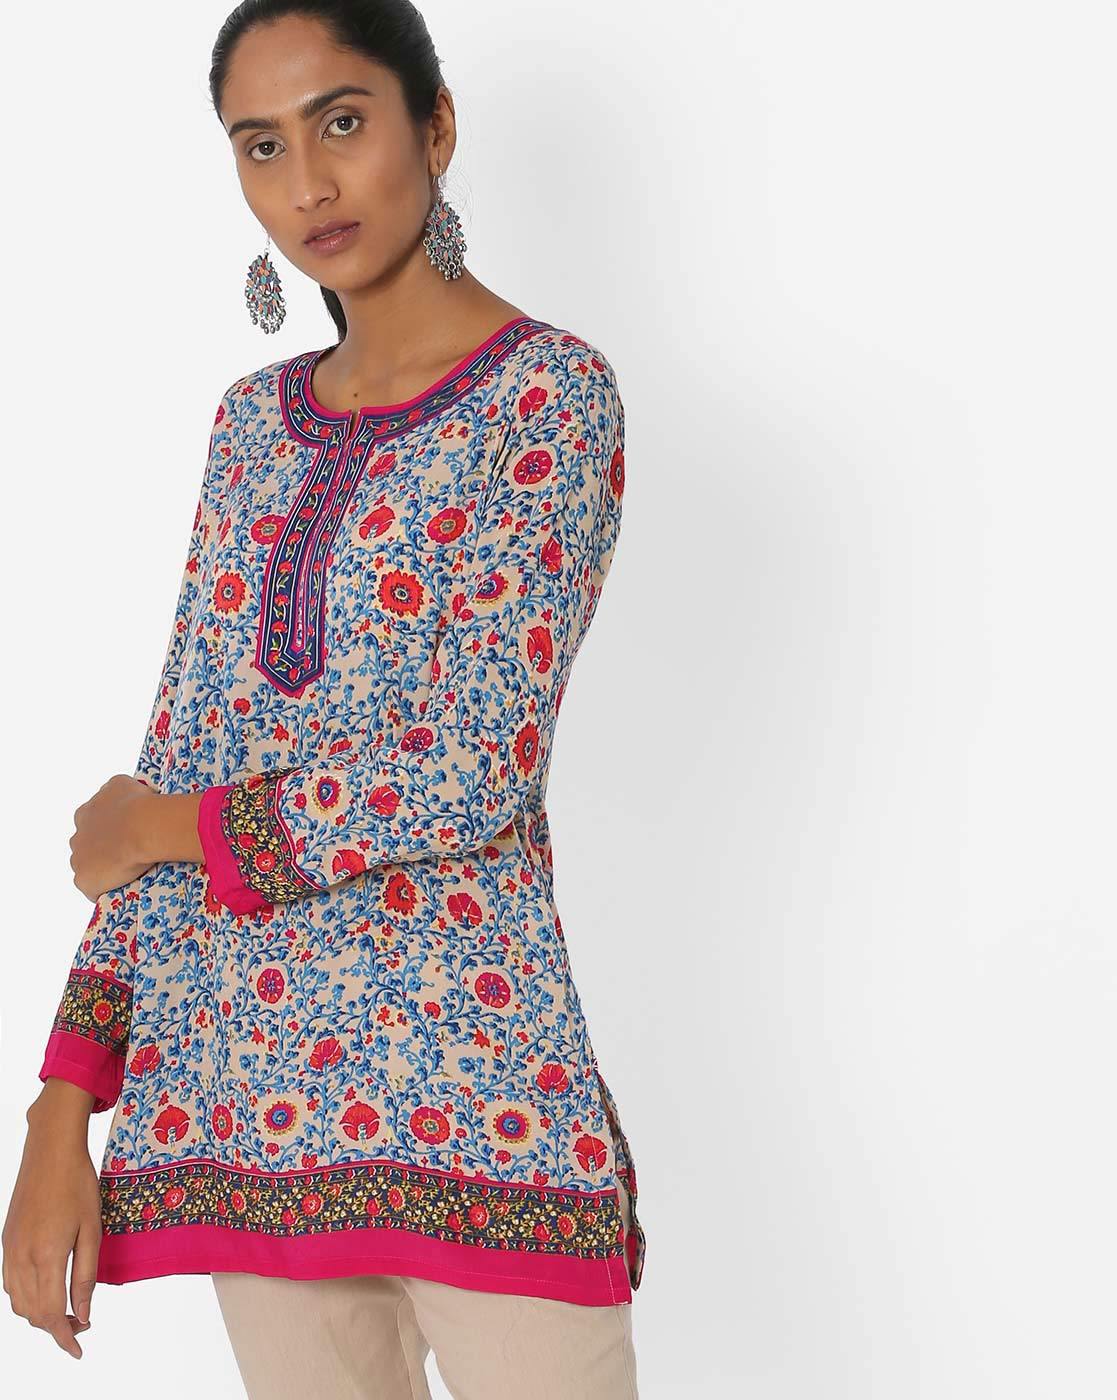 Biba New Arrival | Fashion design patterns, Biba clothing, Online shopping  clothes